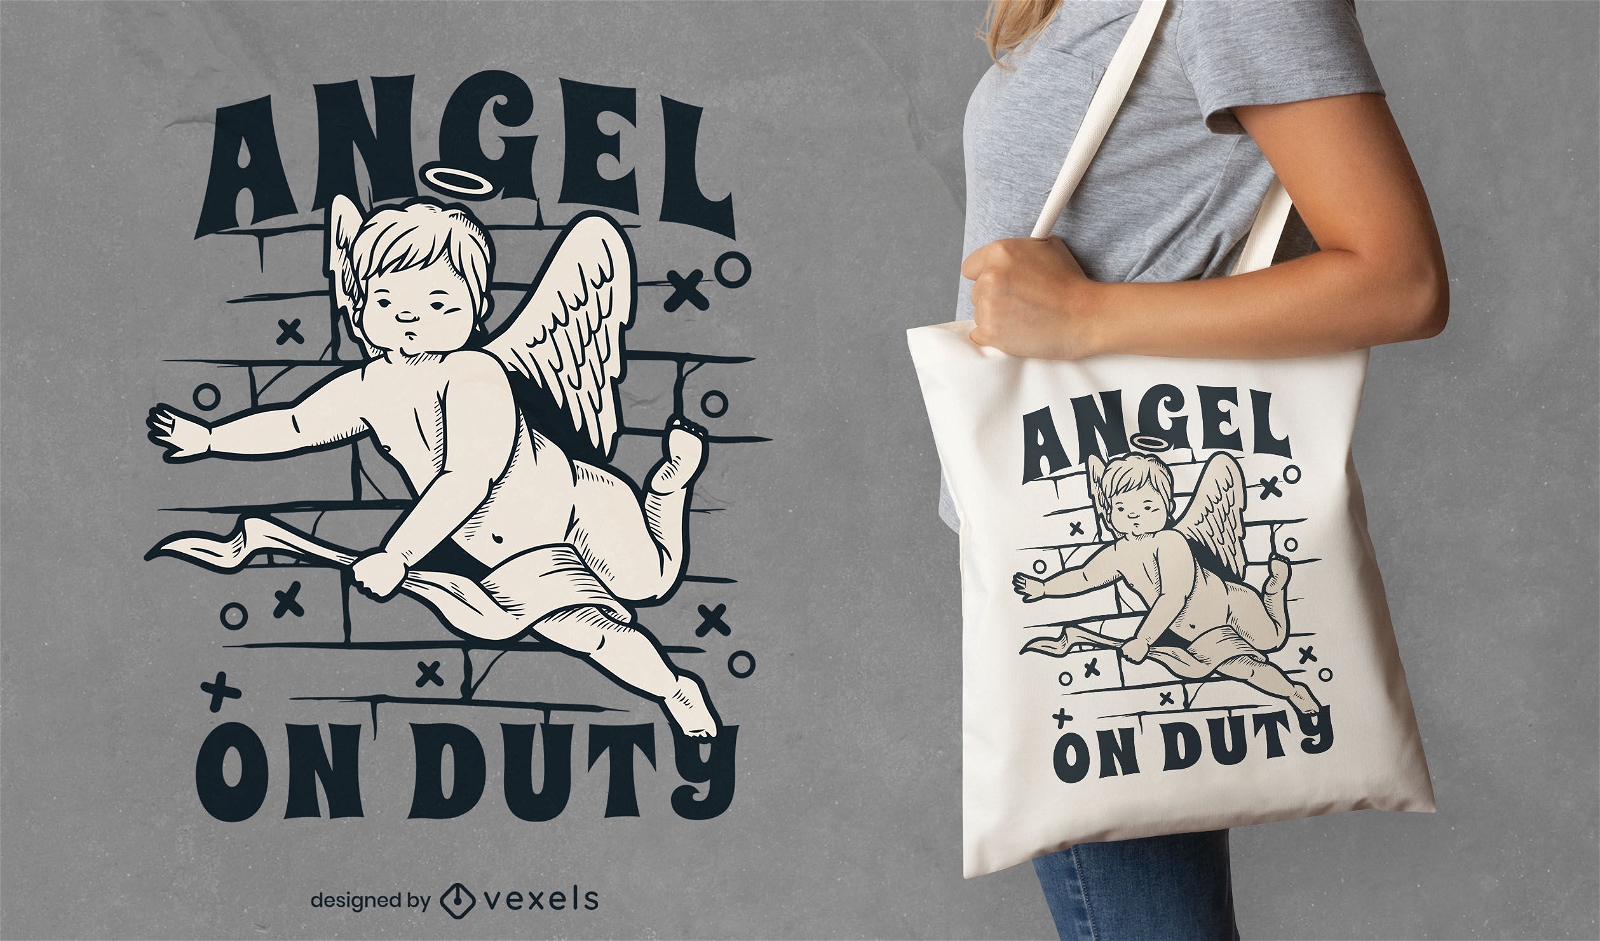 Angel on duty tote bag design